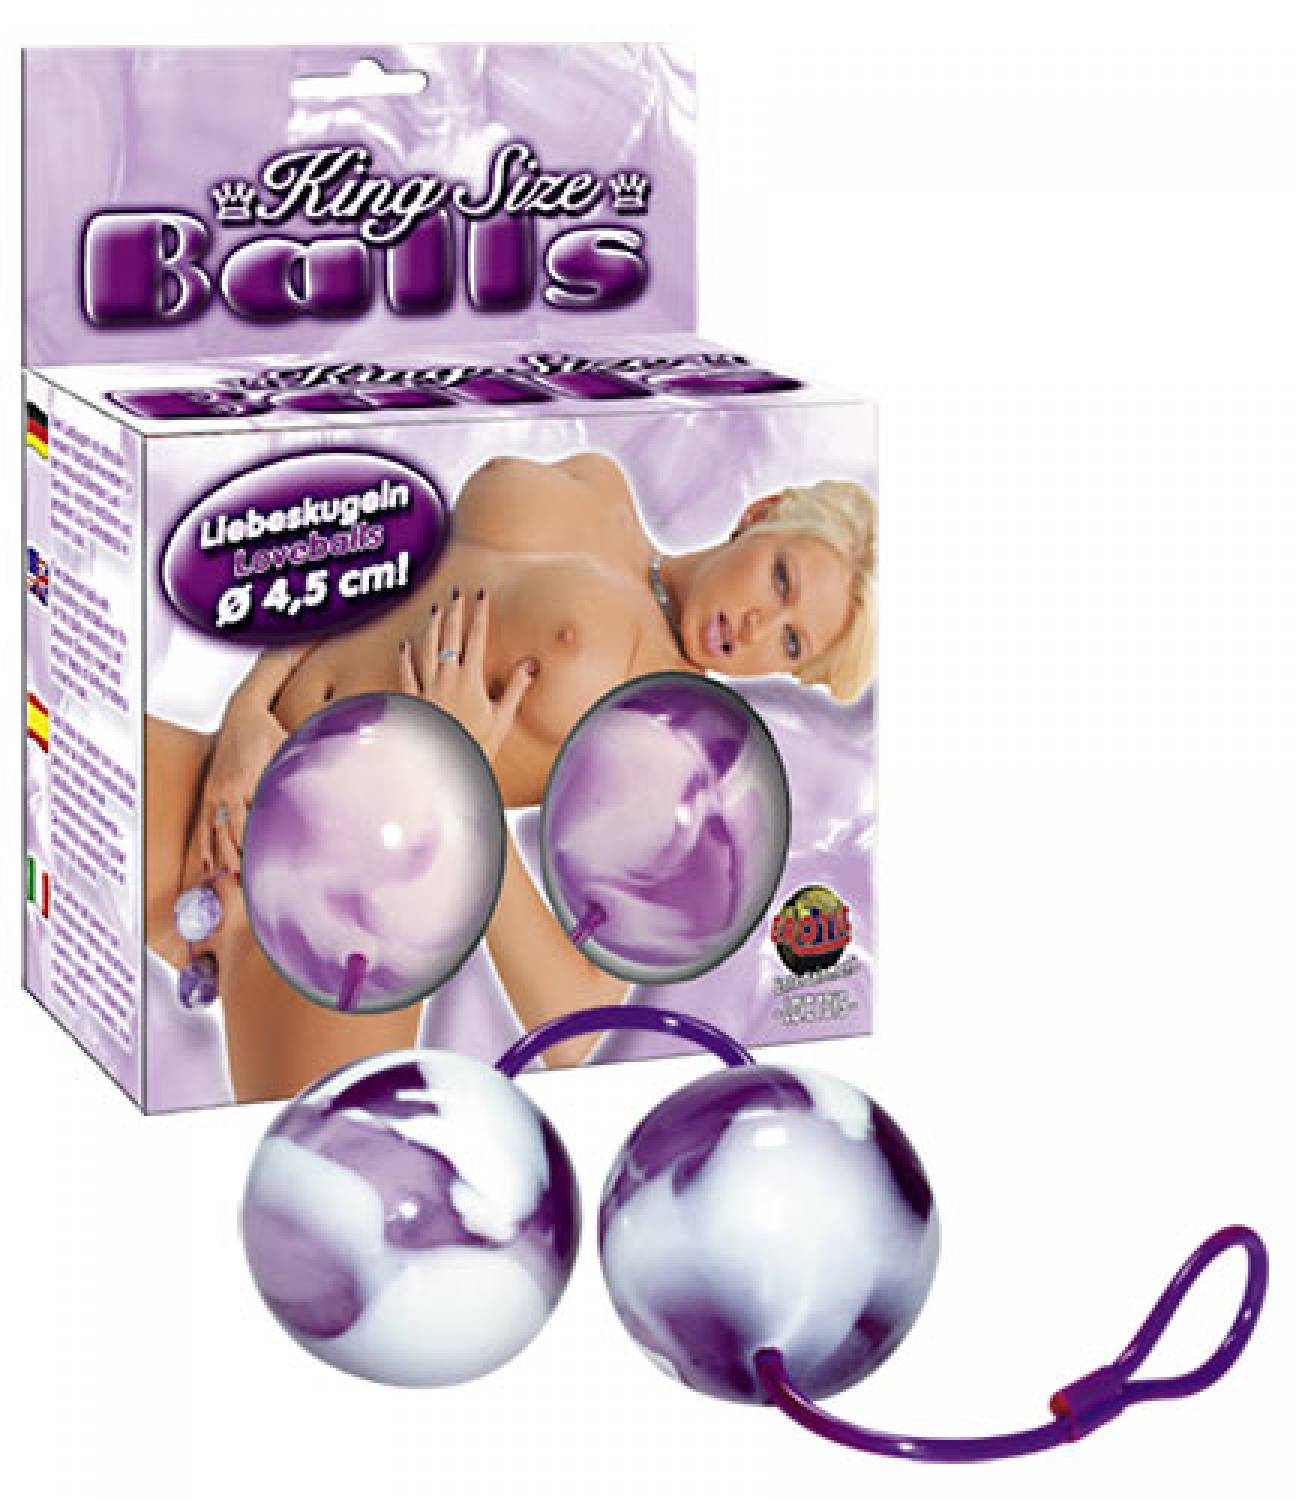 Erotic Entertainment Love Toys King-Size Balls